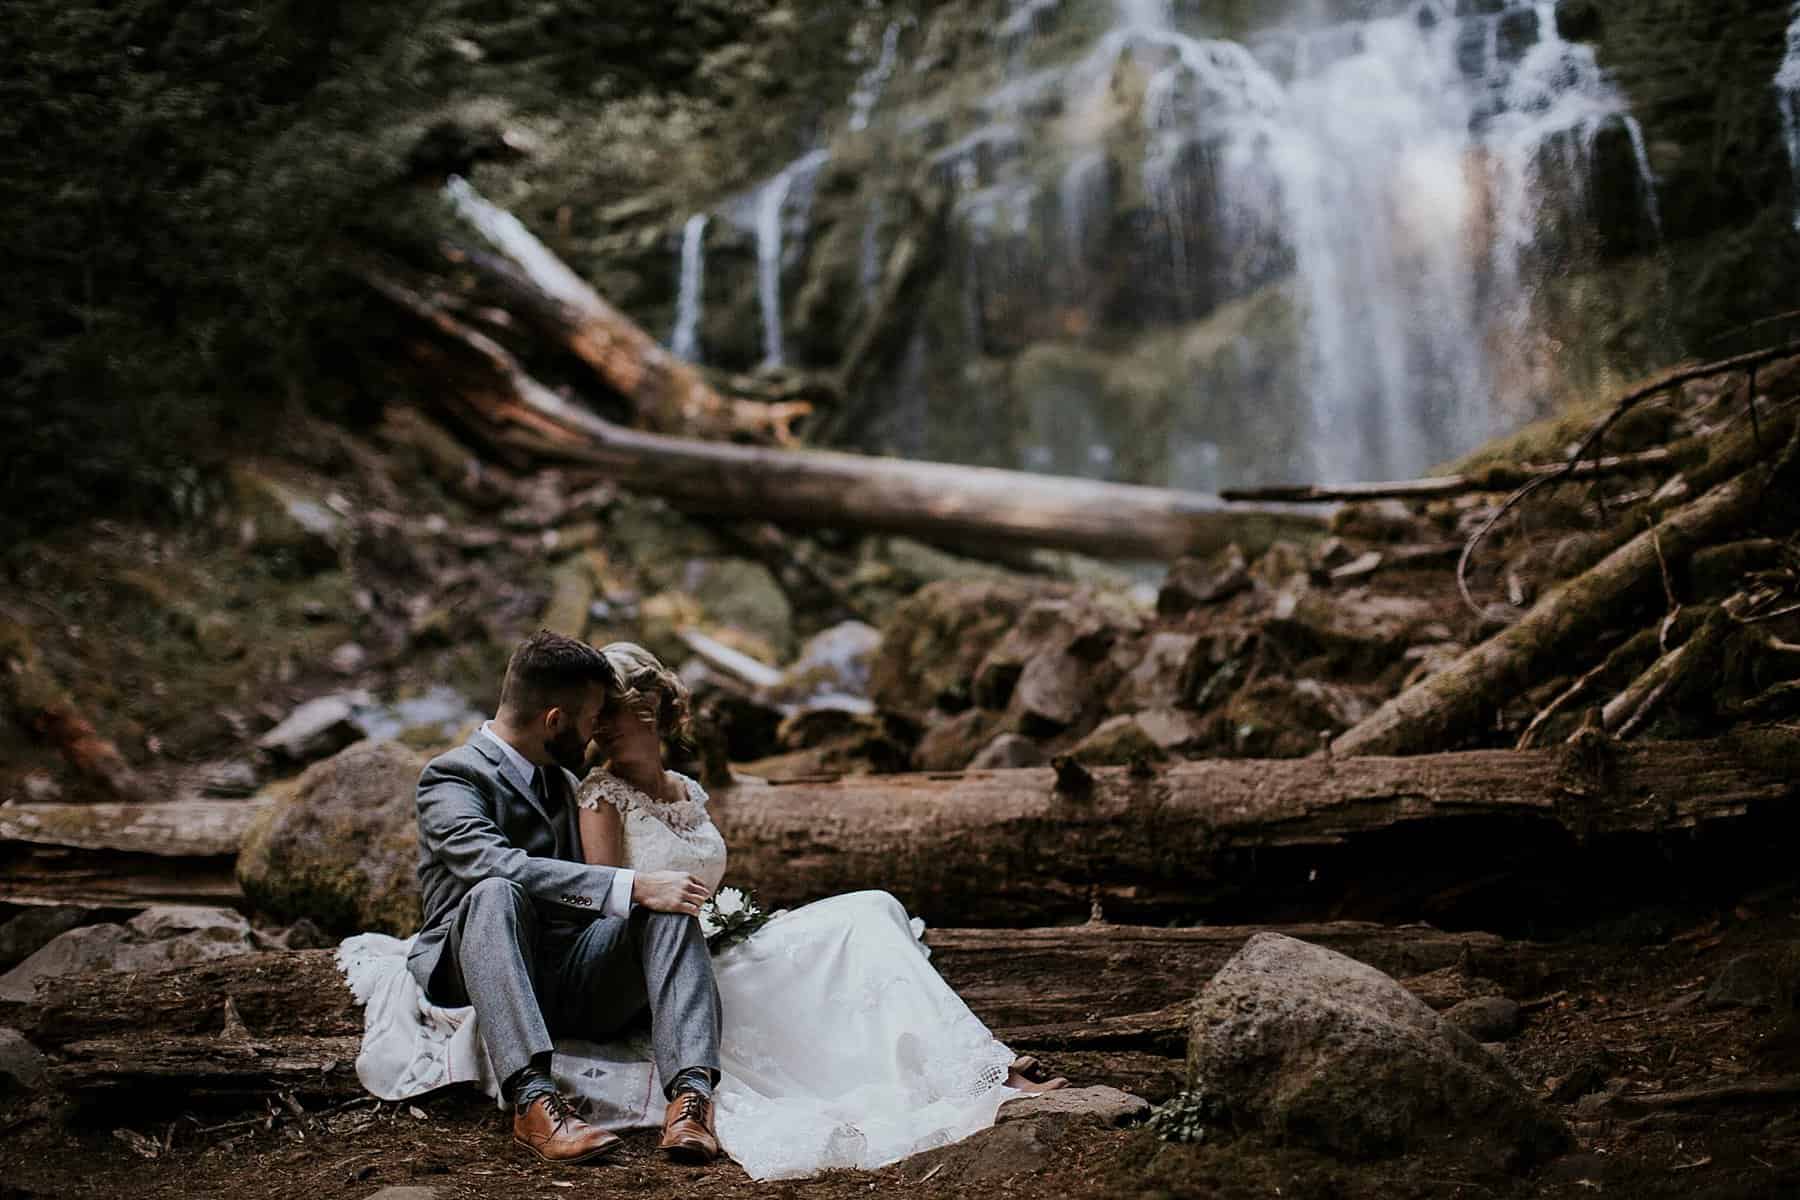 bend-central-oregon-waterfall-adventure-wedding-elopement-010